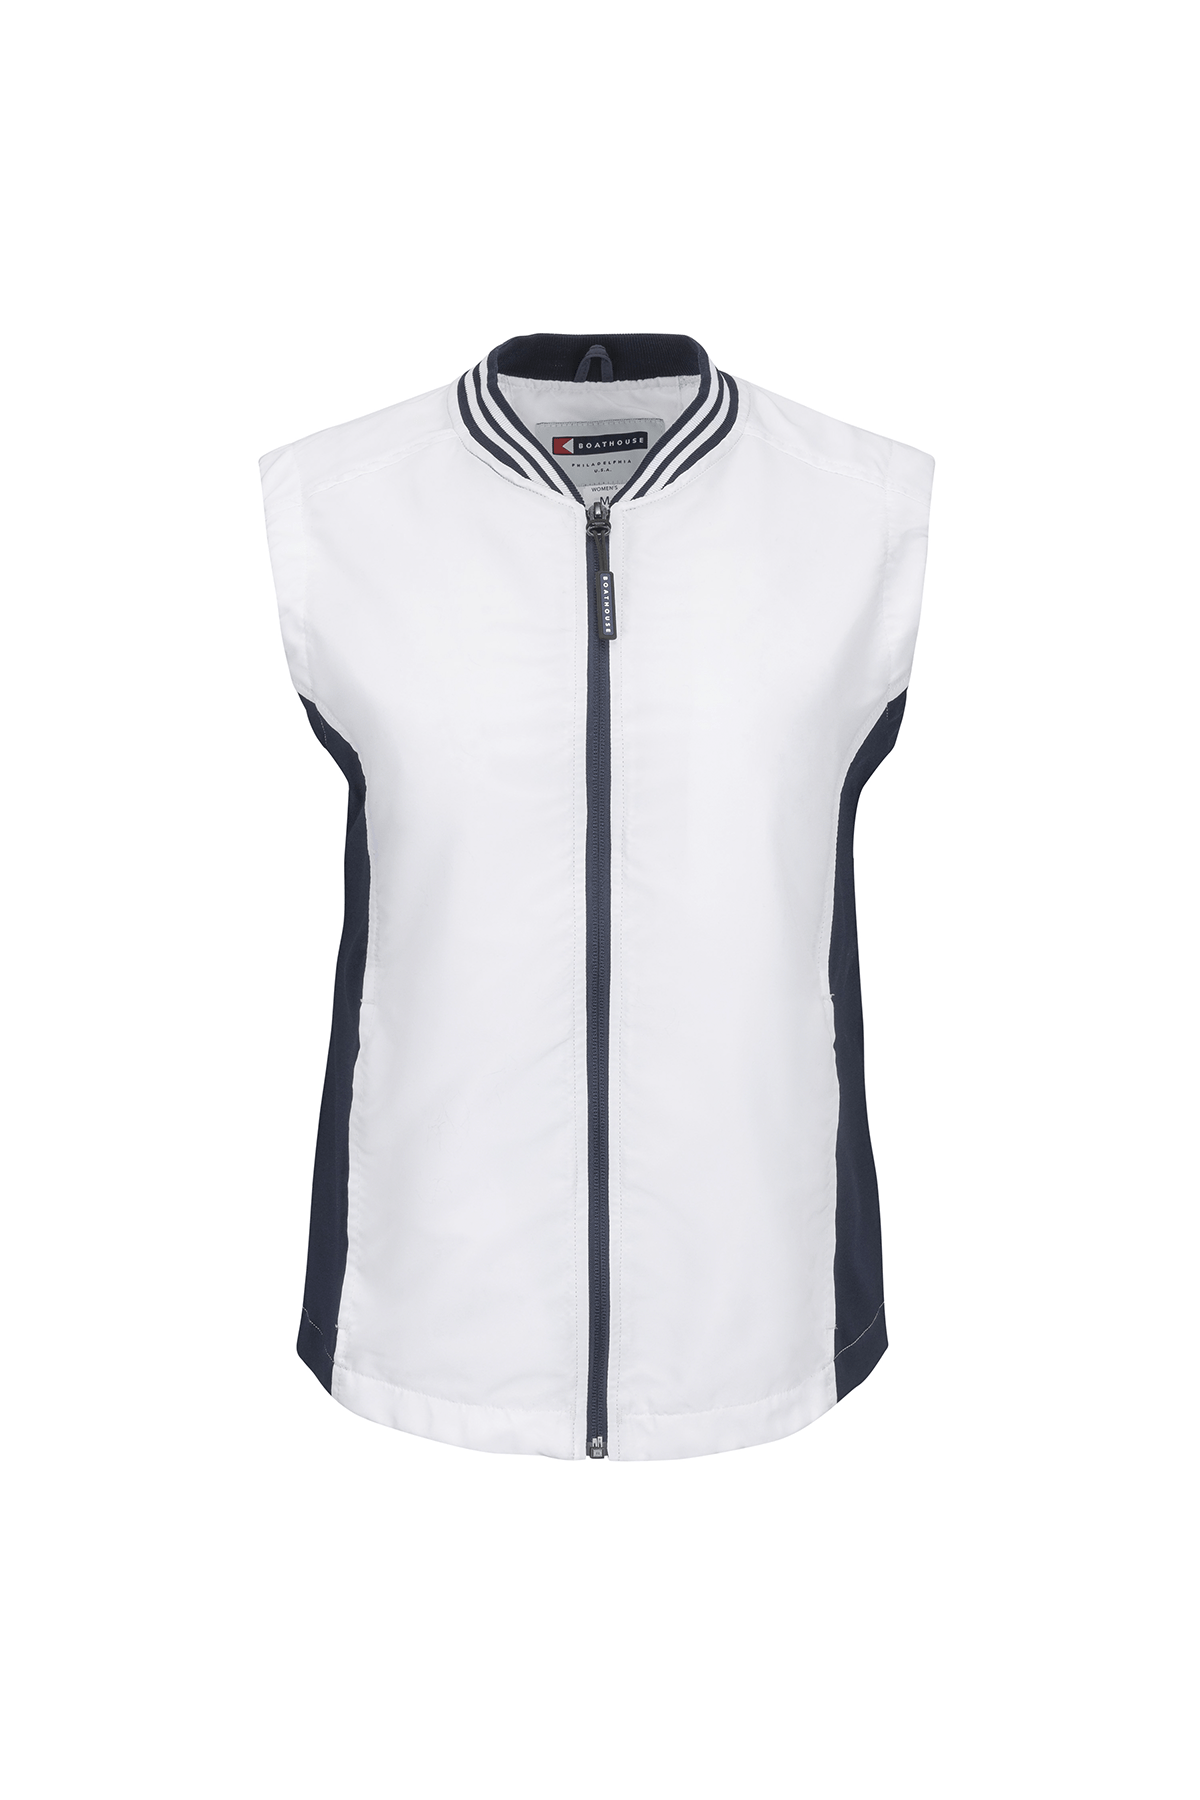 Women's Freestyle Supplex Vest White / Small